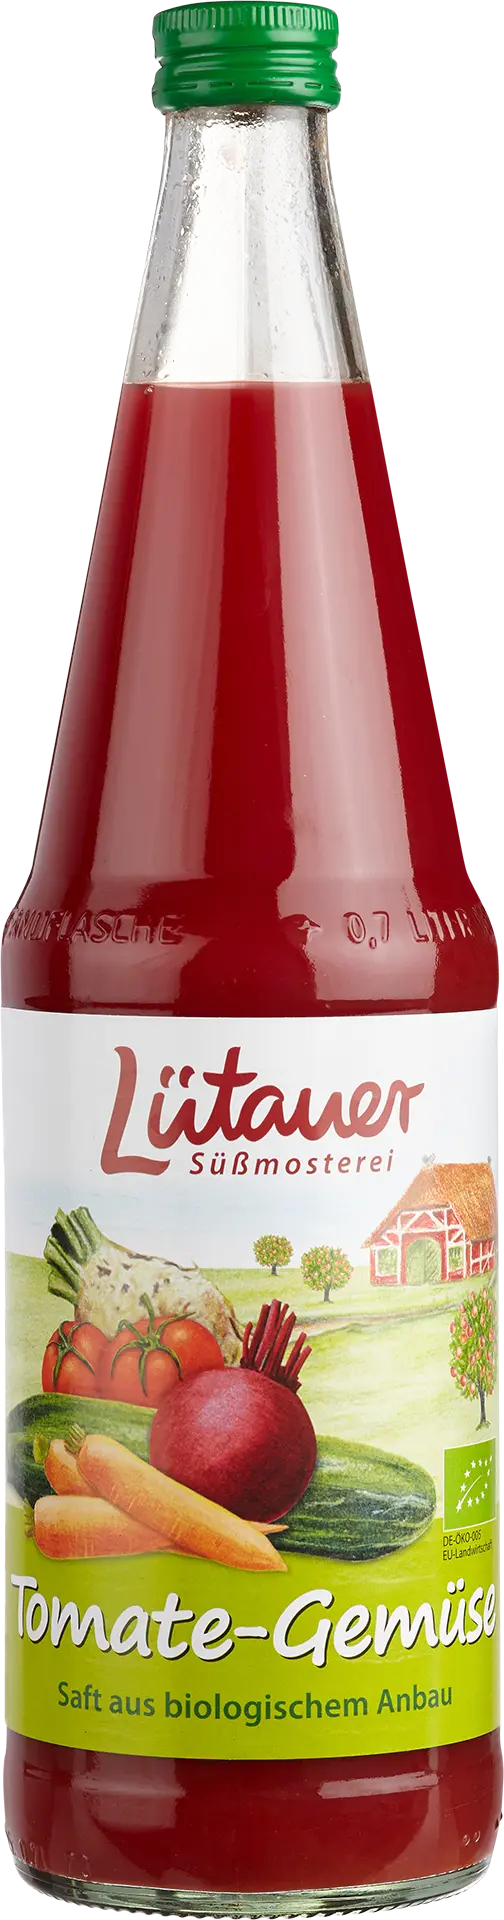 Lütauer Bio Tomaten-Gemüsesaft